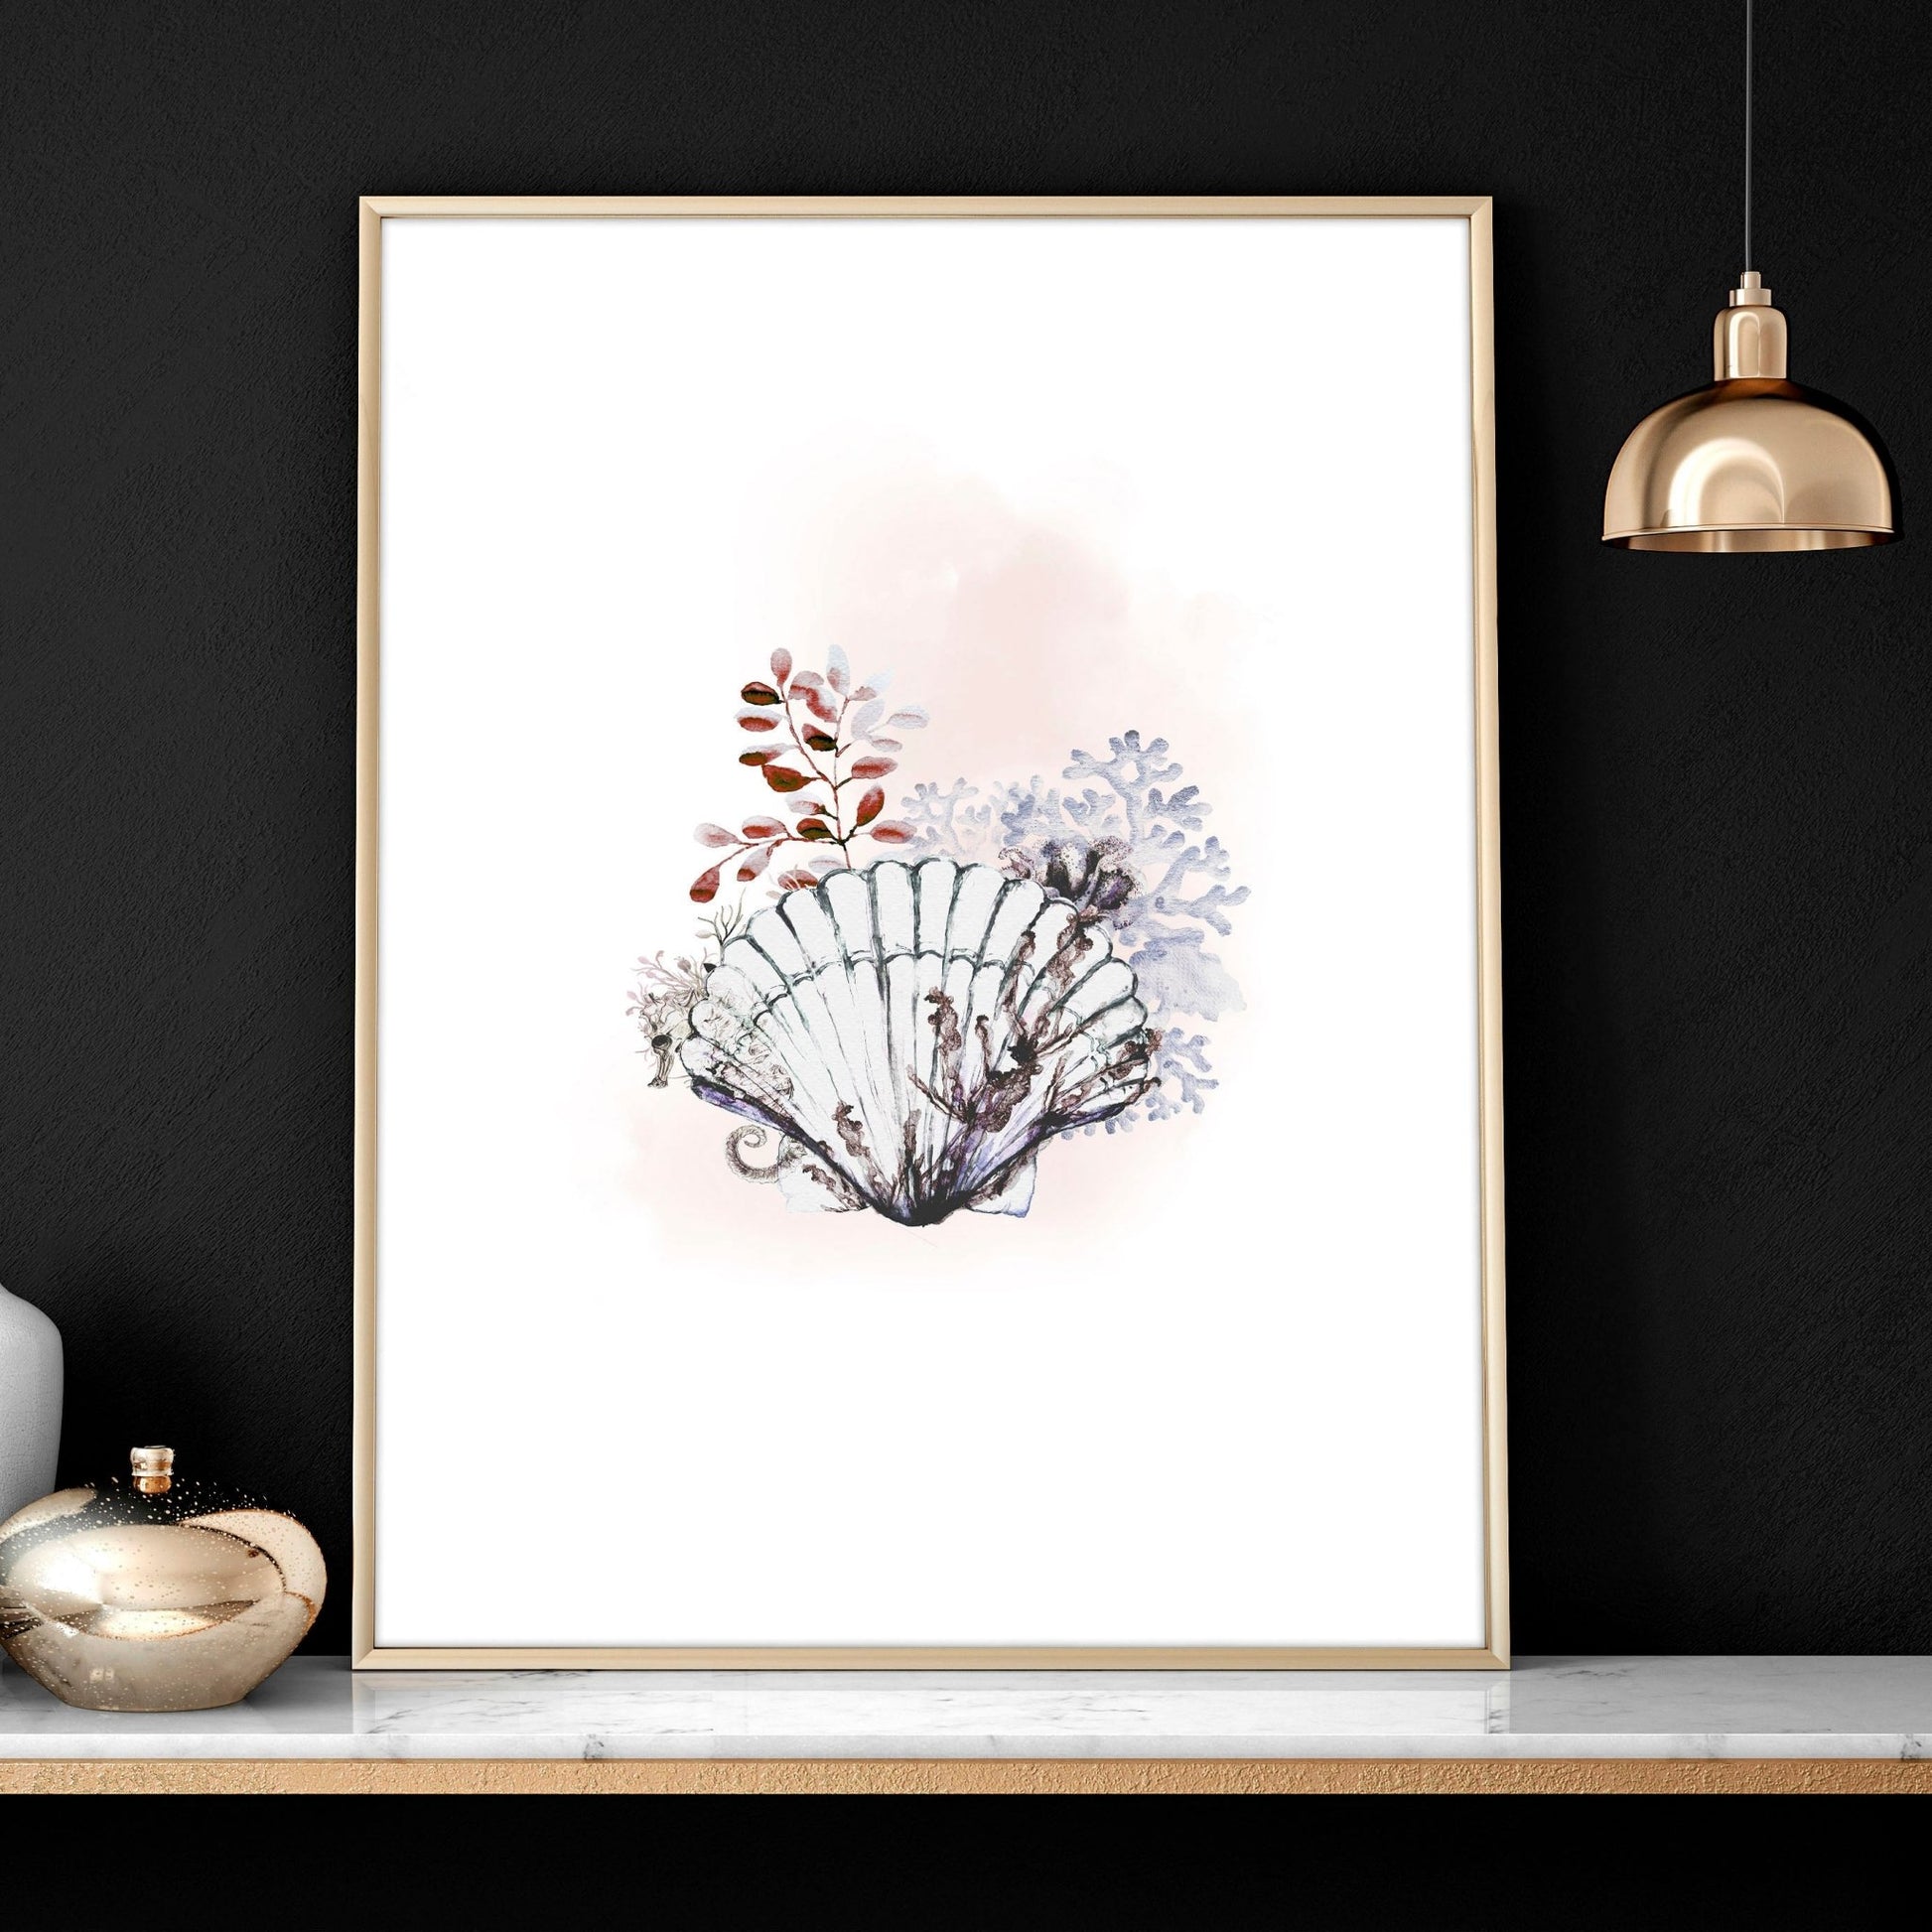 Home office print | set of 3 Seashells wall art prints